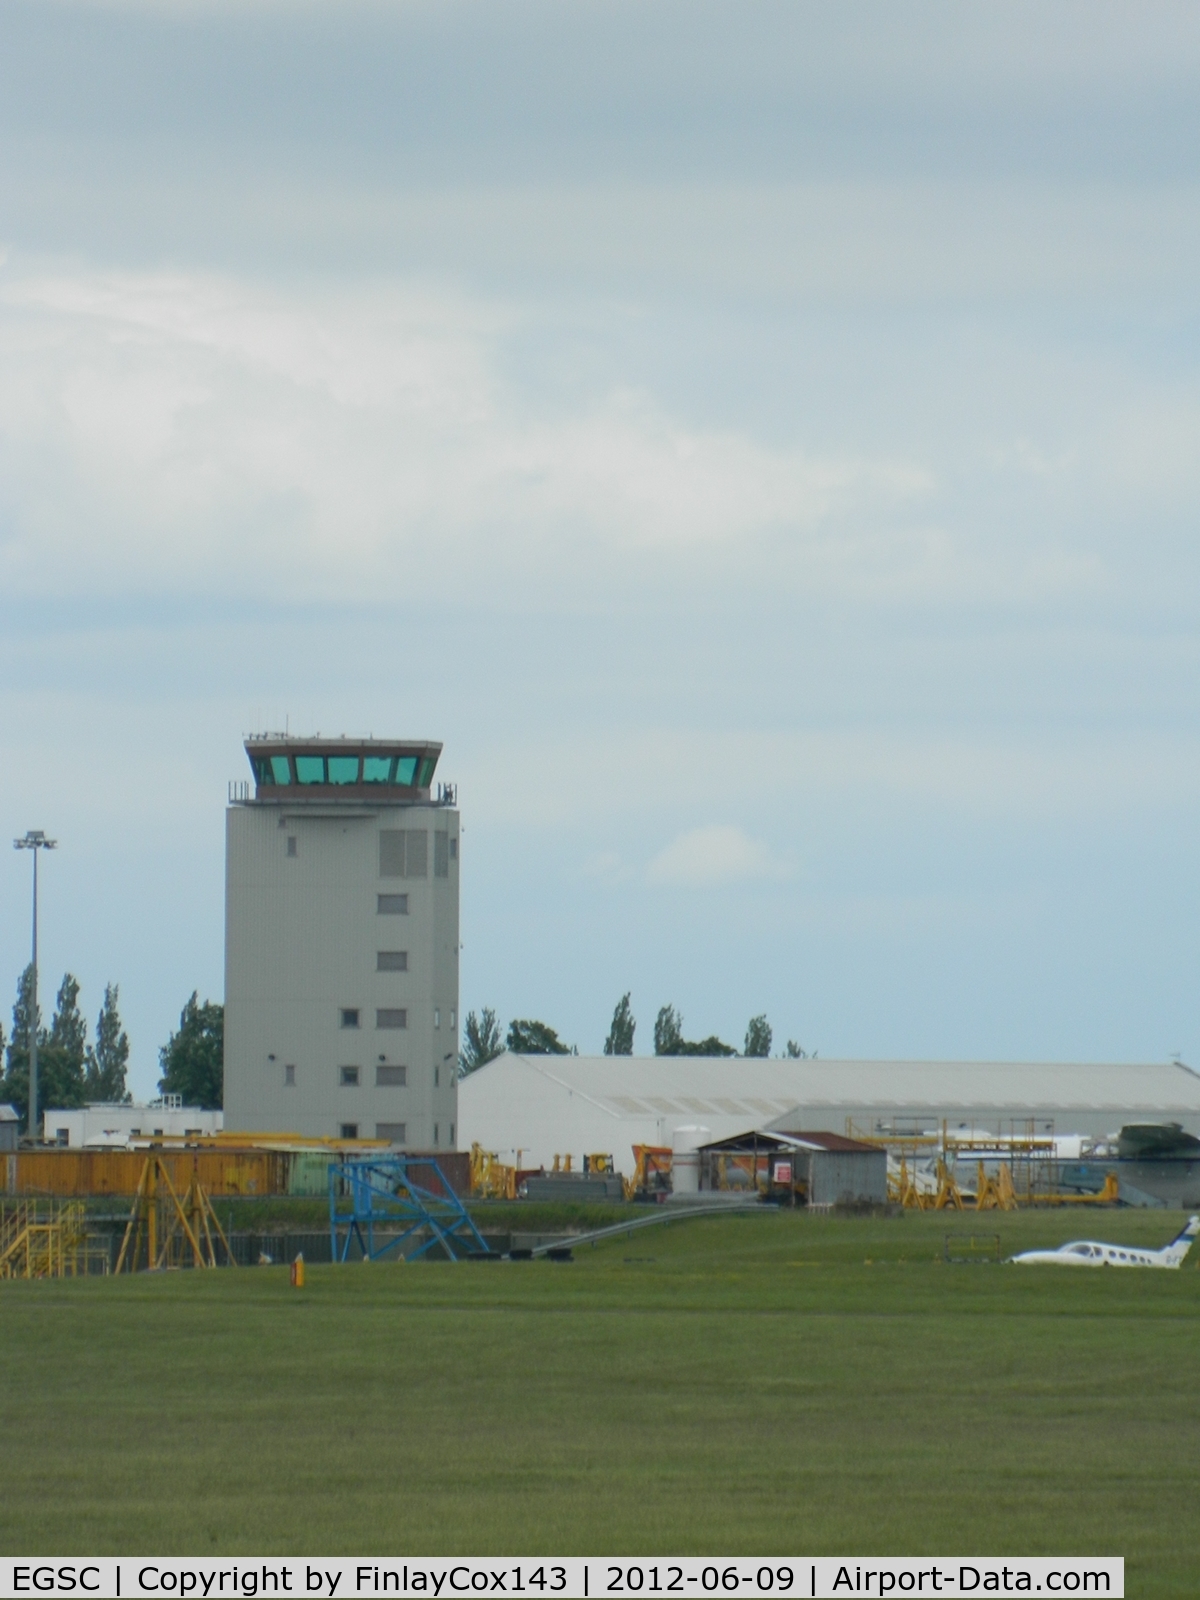 Cambridge Airport, Cambridge, England United Kingdom (EGSC) - The airport's control tower.